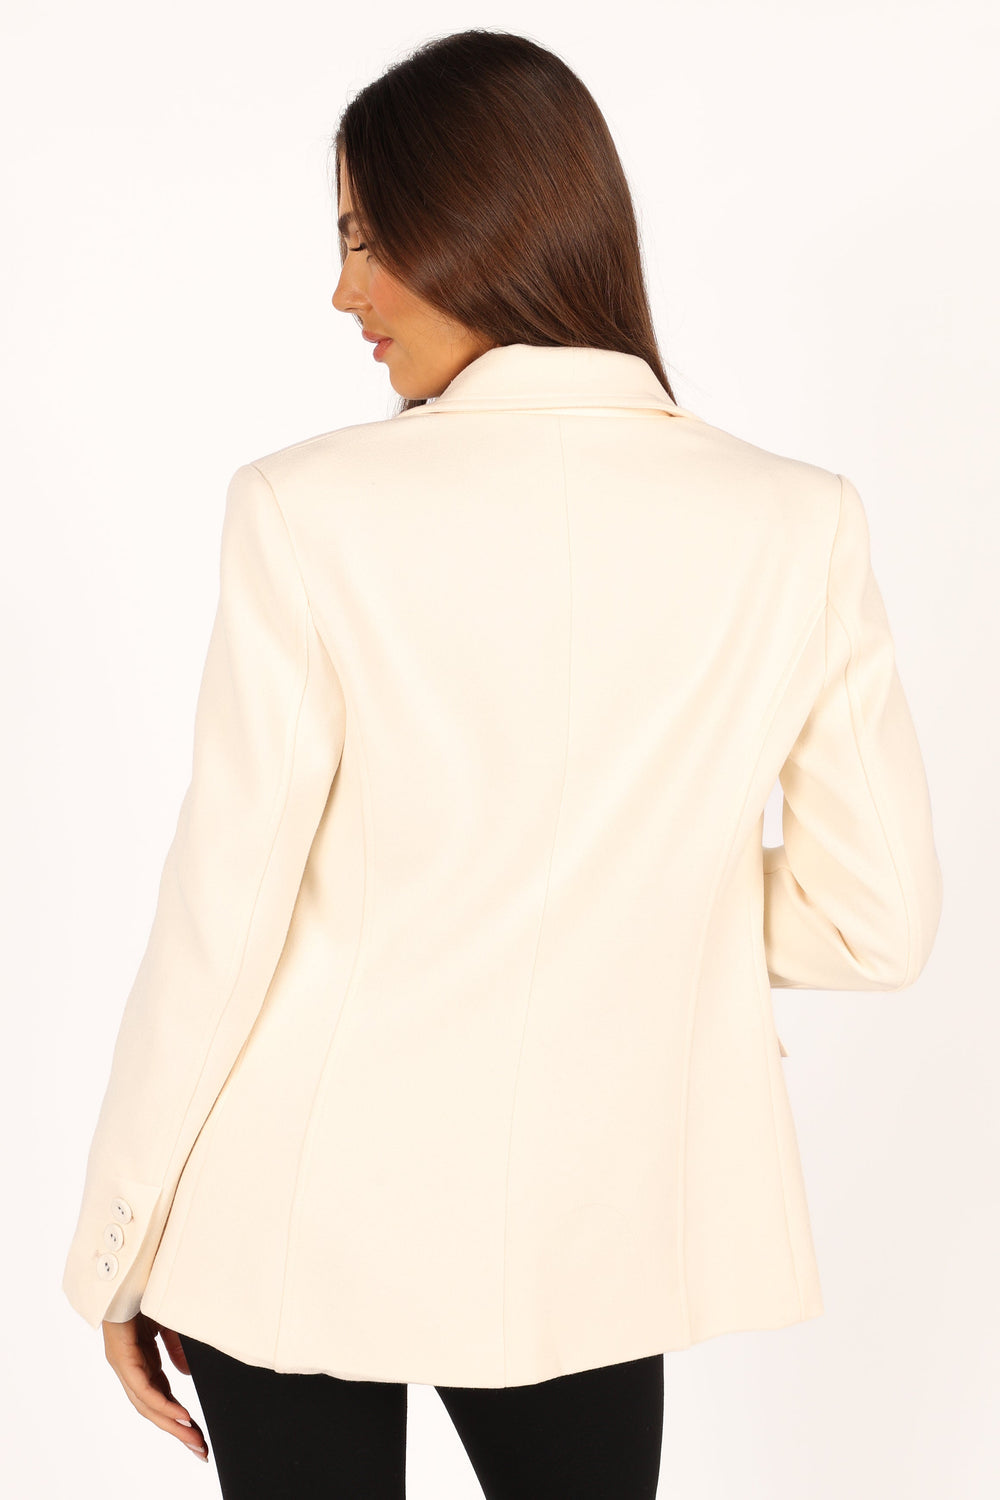 Outerwear @Lillian Button Front Blazer - Cream